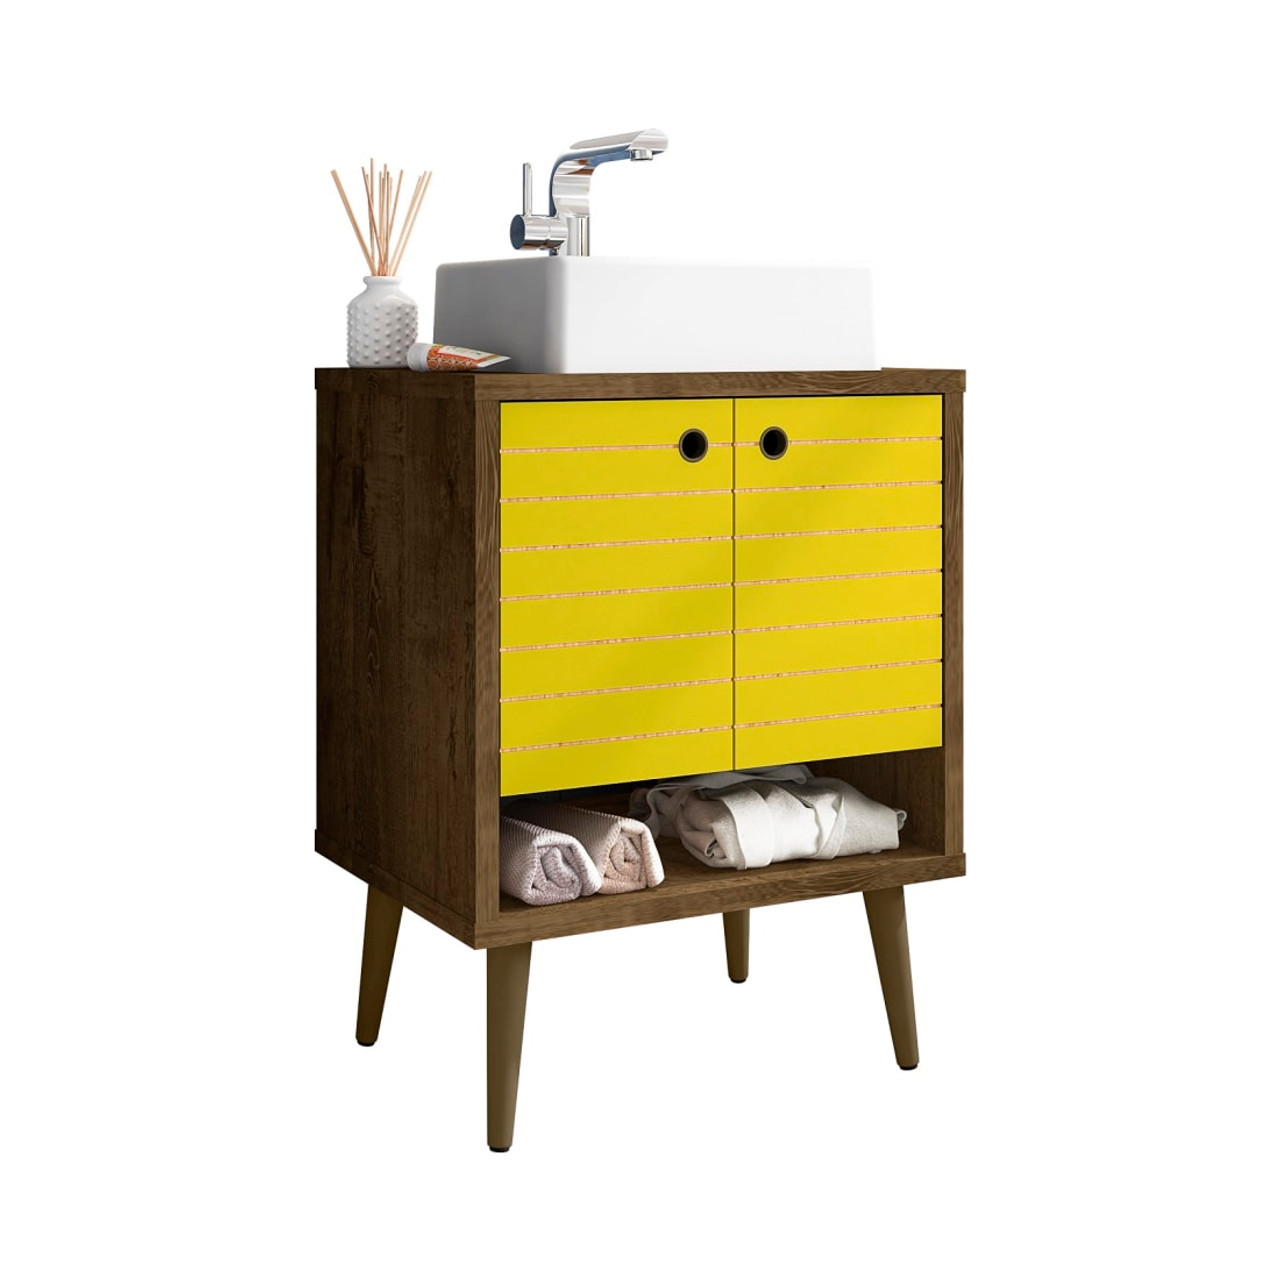 Liberty 23.62” Bathroom Vanity Sink in Rustic Brown and Yellow